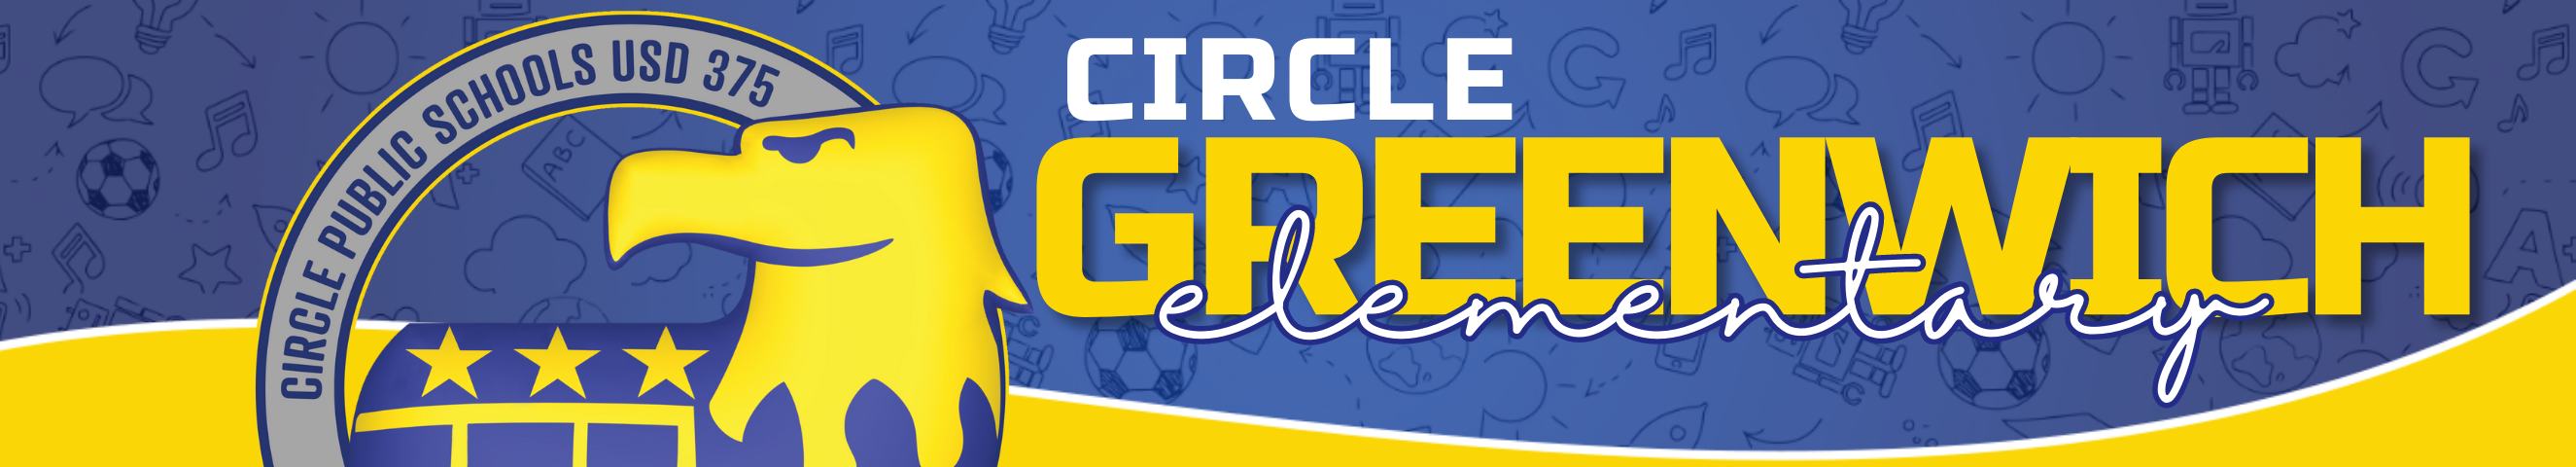 Circle Greenwich Elementary